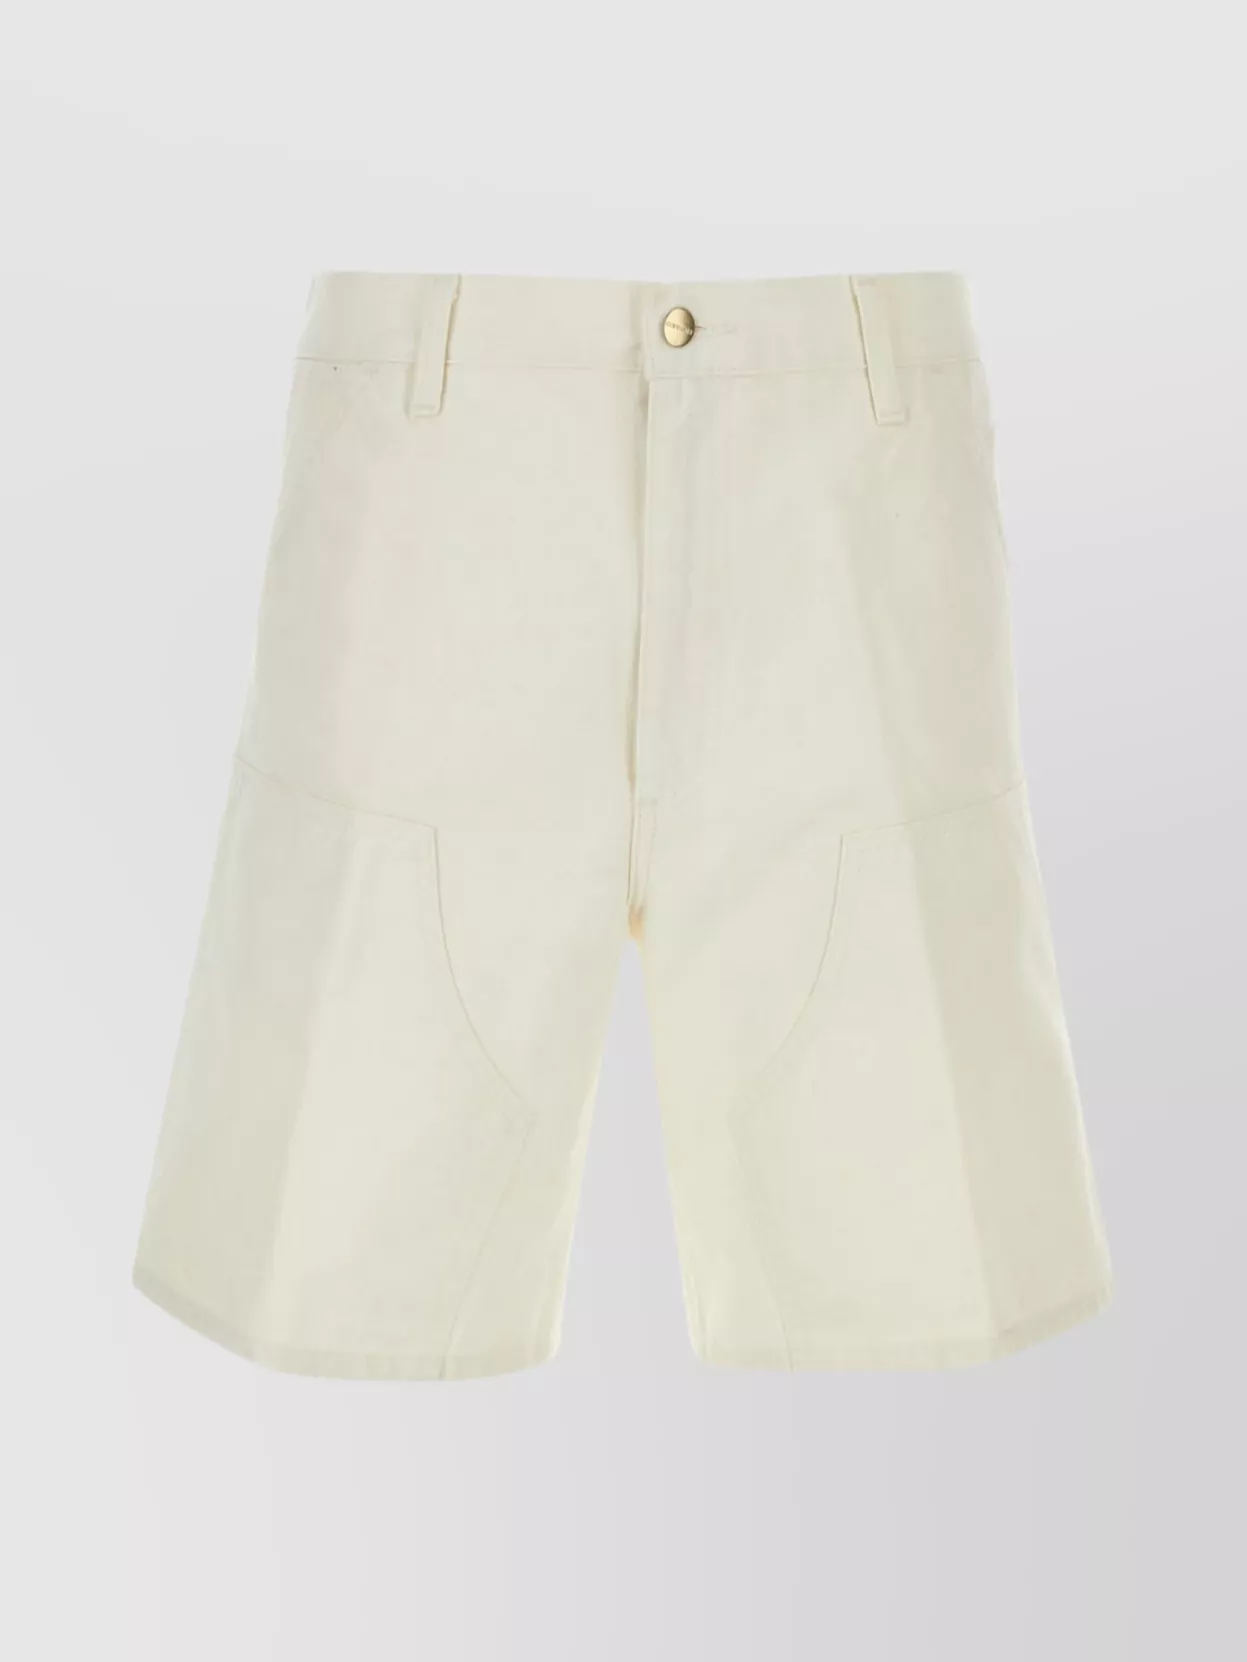 Shop Carhartt Double Knee Cotton Shorts